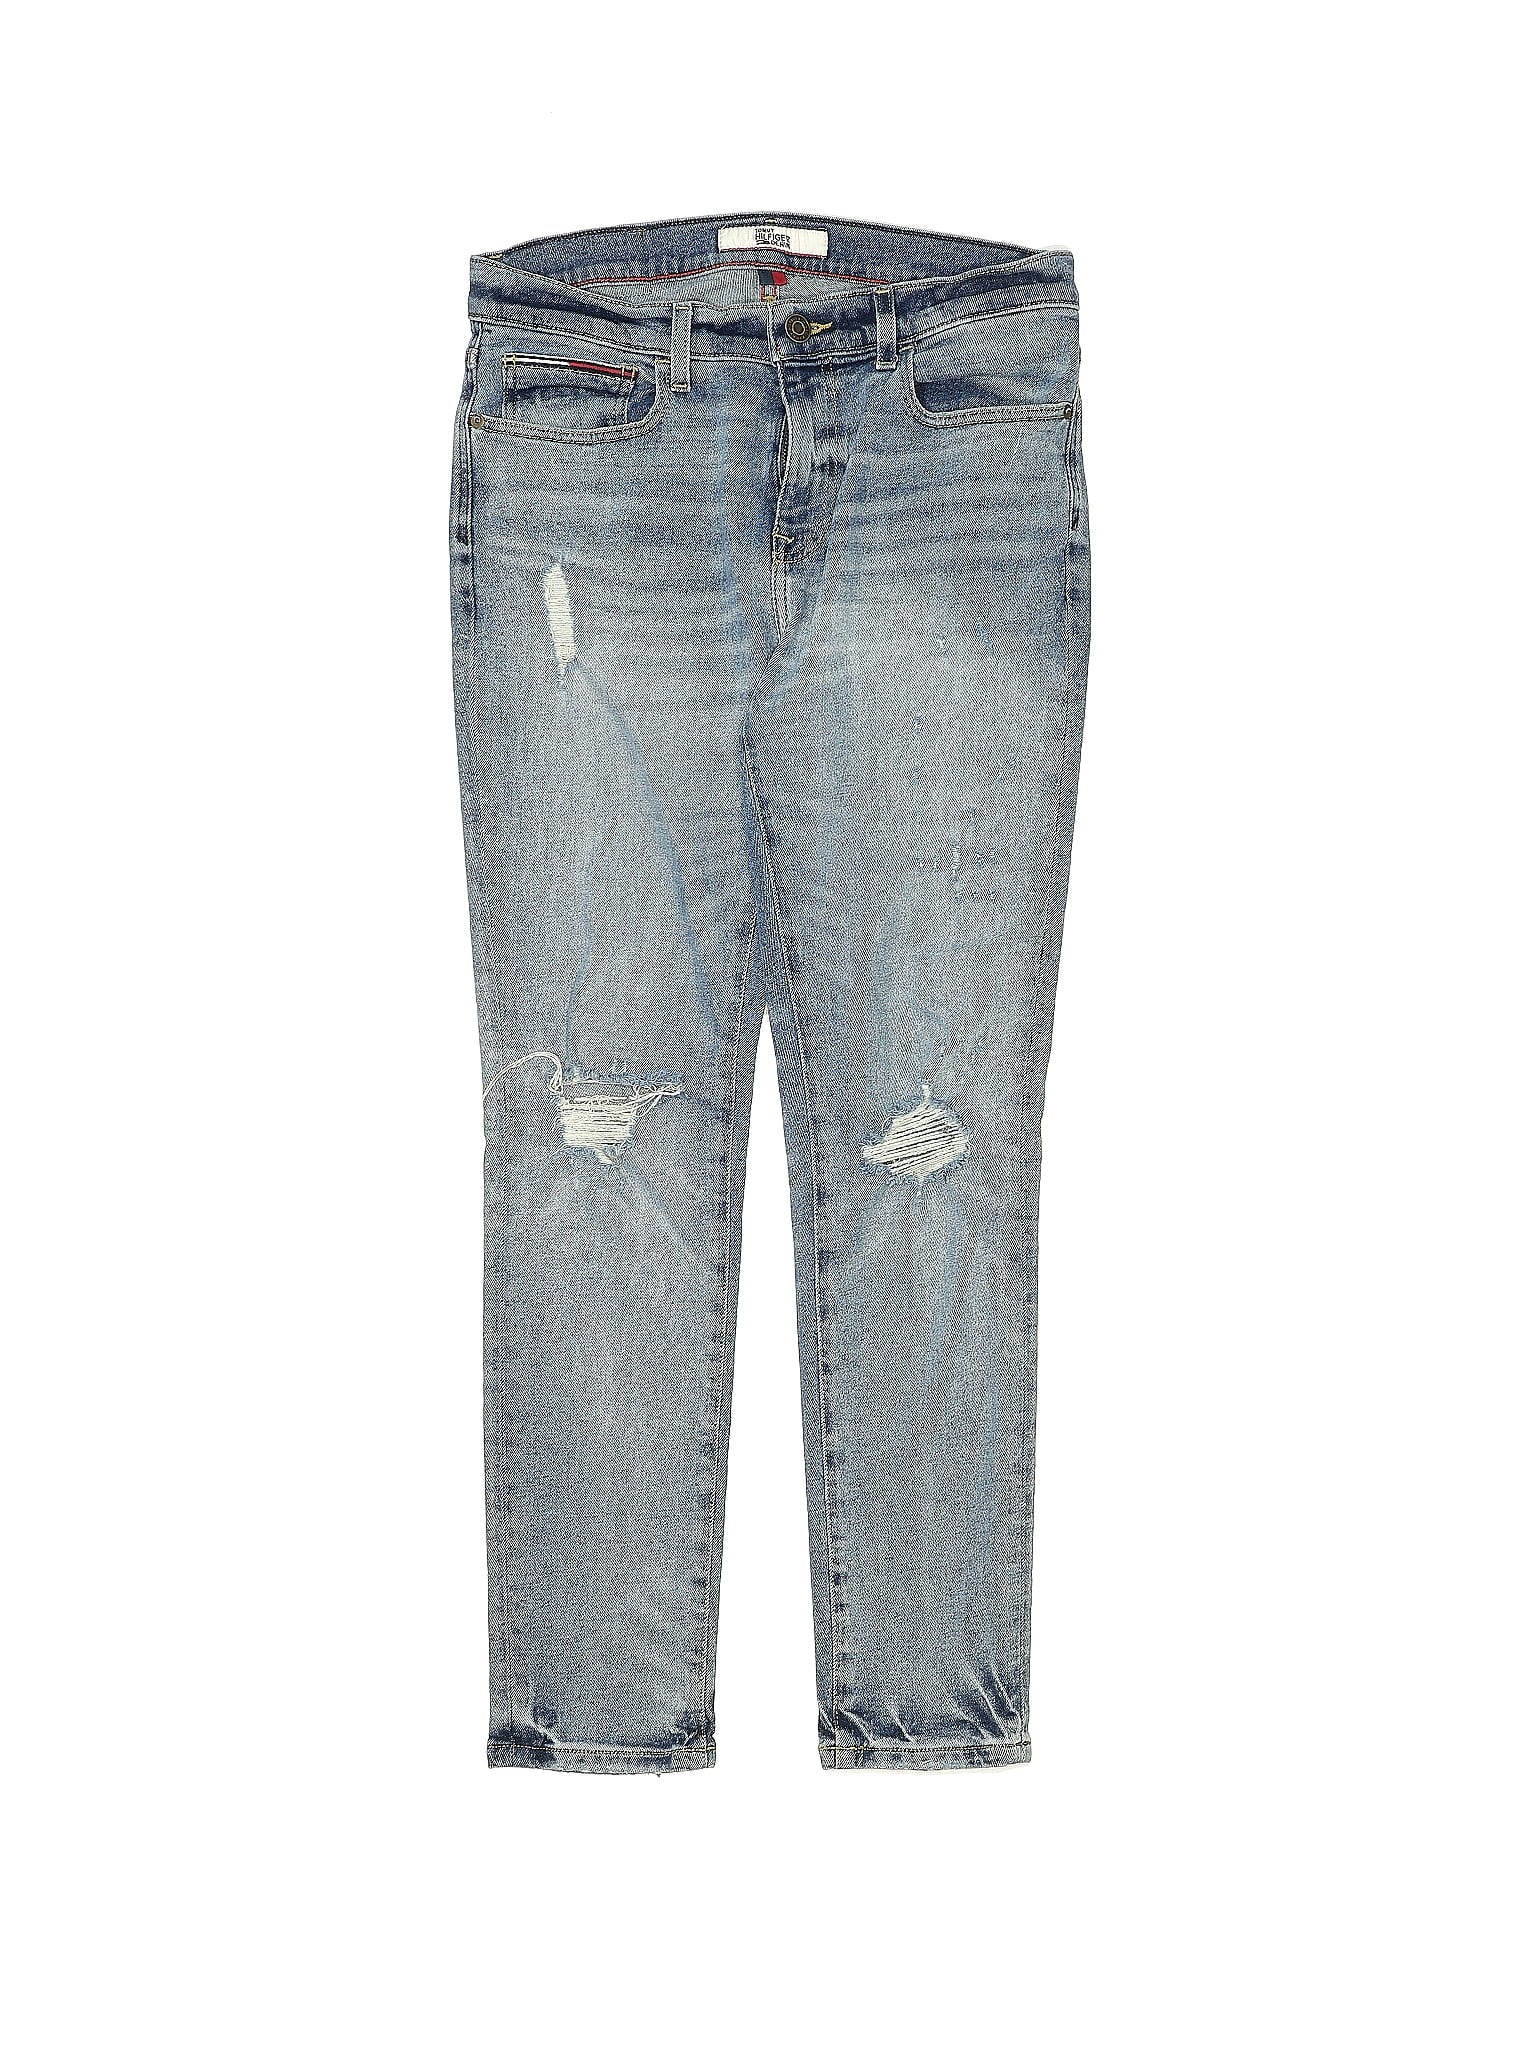 Jeans waist size - 31 ; 30 LENGTH